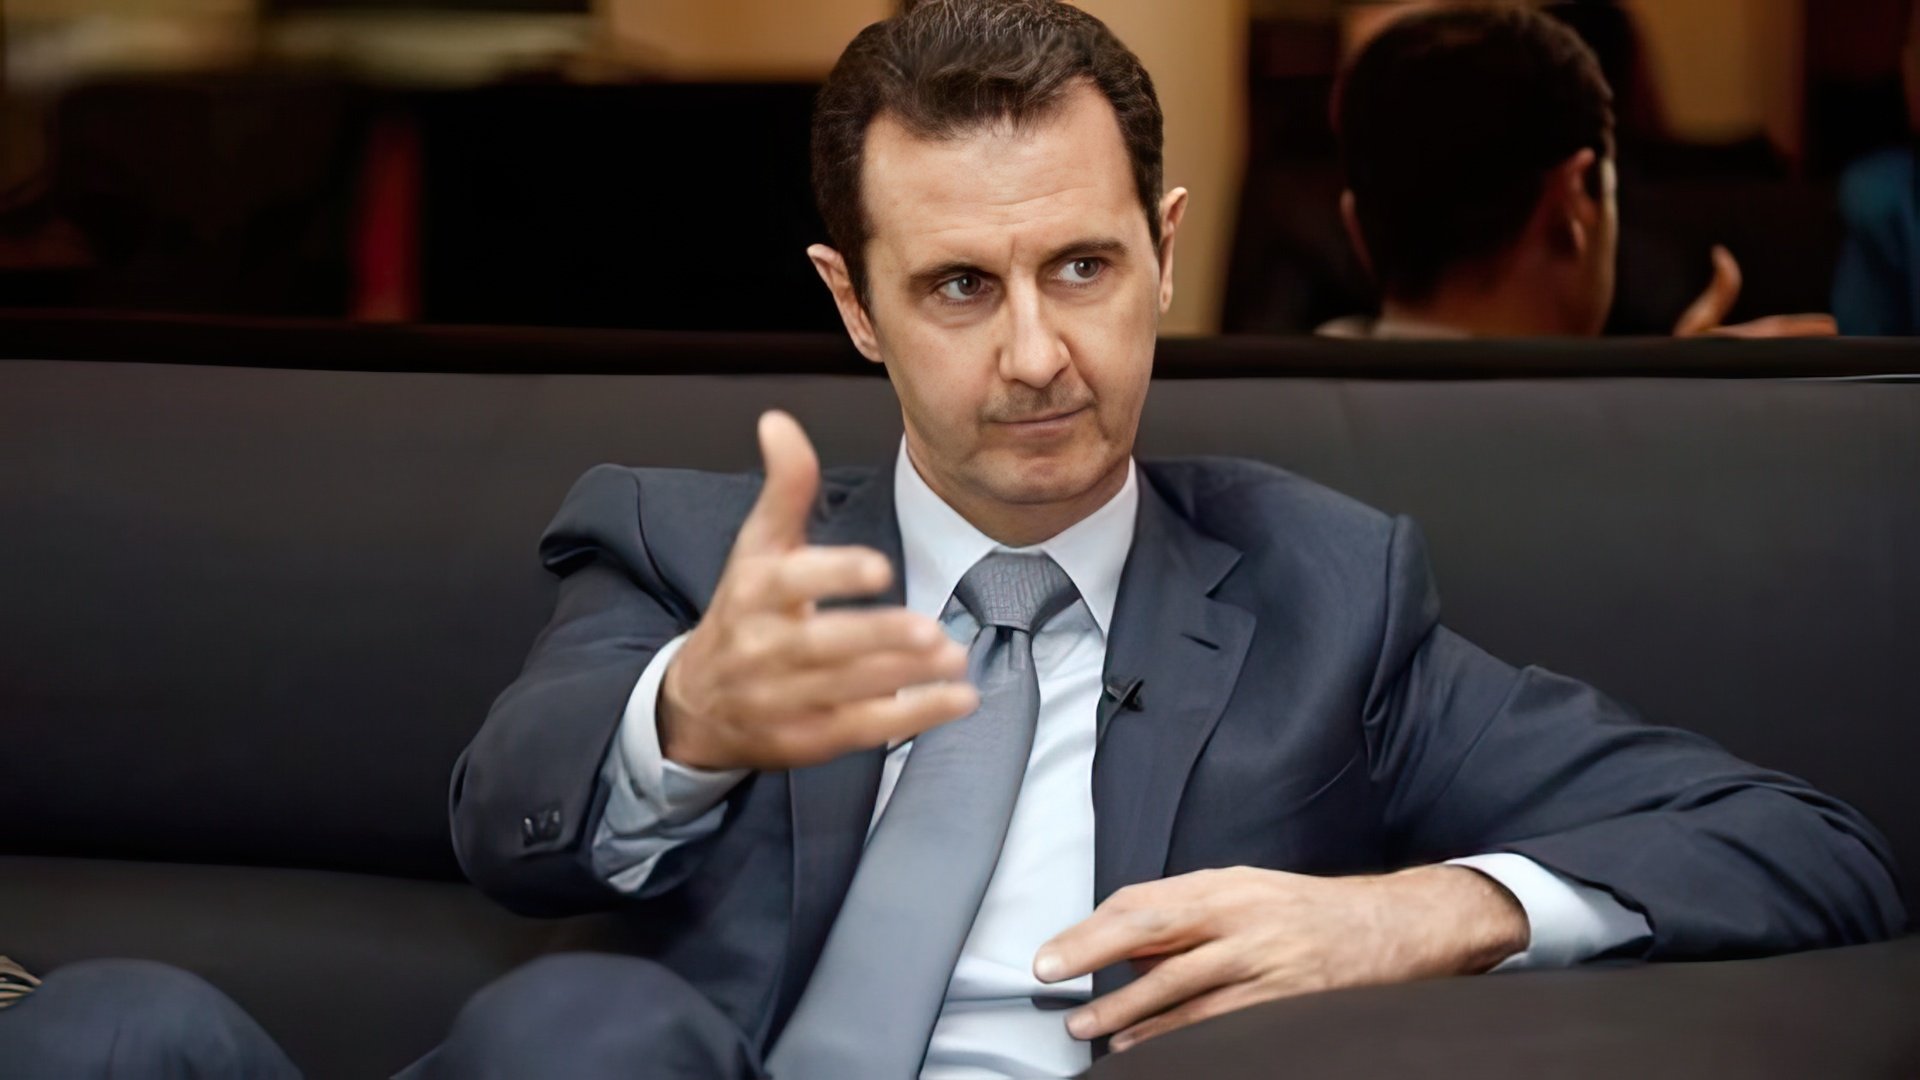 Syria under Bashar Al-Assad’s rule found itself strangled by sanctions